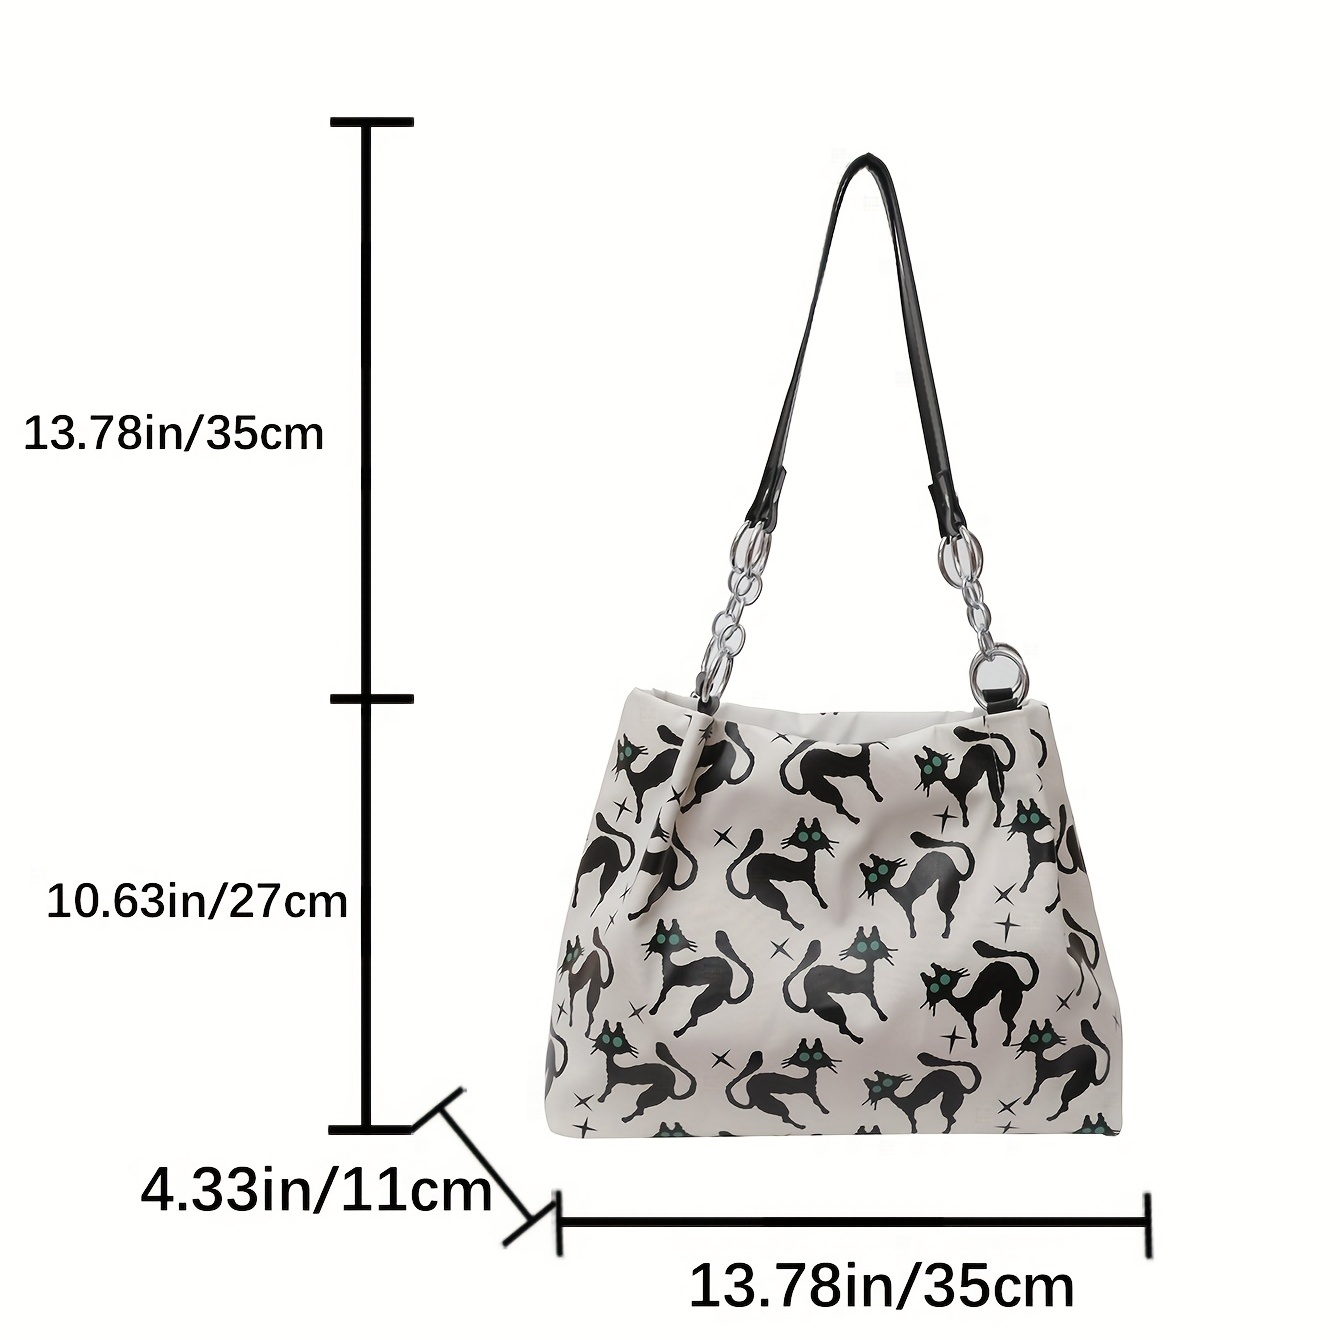 Cute Cartoon Tote Bags Overlarge Embroidery Shoulder Bag Nylon Eco